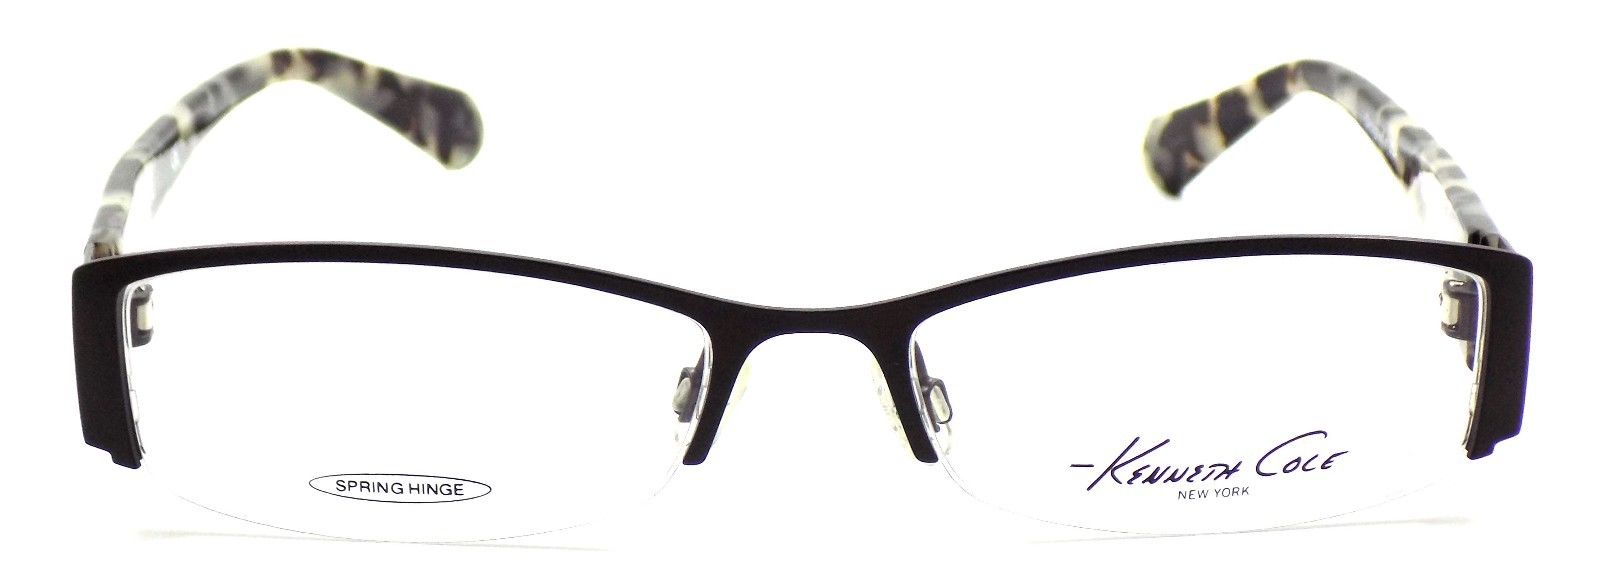 2-Kenneth Cole NY KC203 002 Women's Eyeglasses Frames 53-17-135 Matte Black + CASE-664689595563-IKSpecs